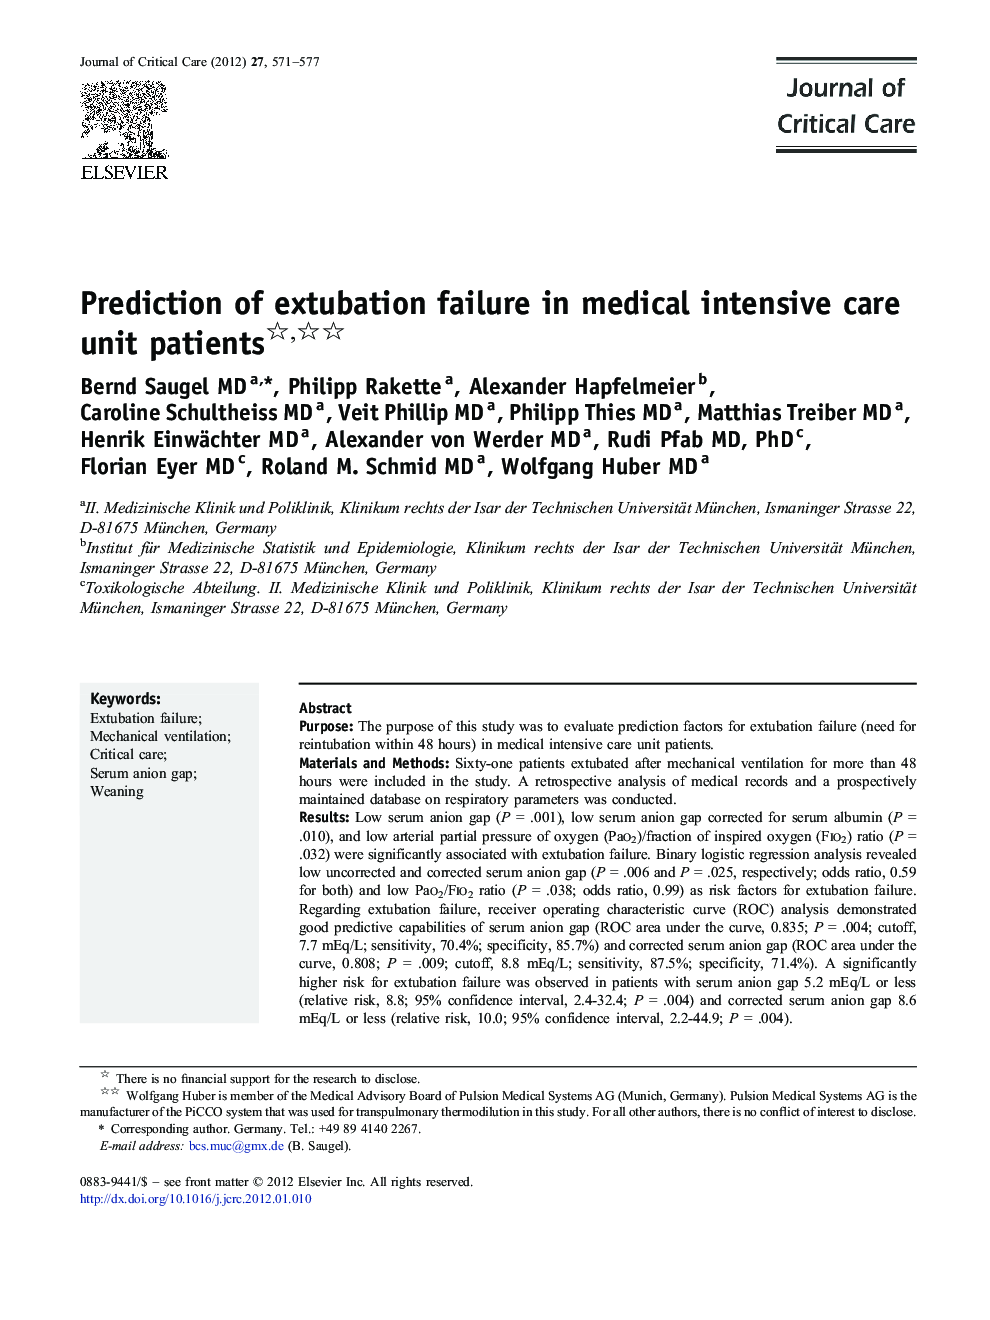 VentilationPrediction of extubation failure in medical intensive care unit patients